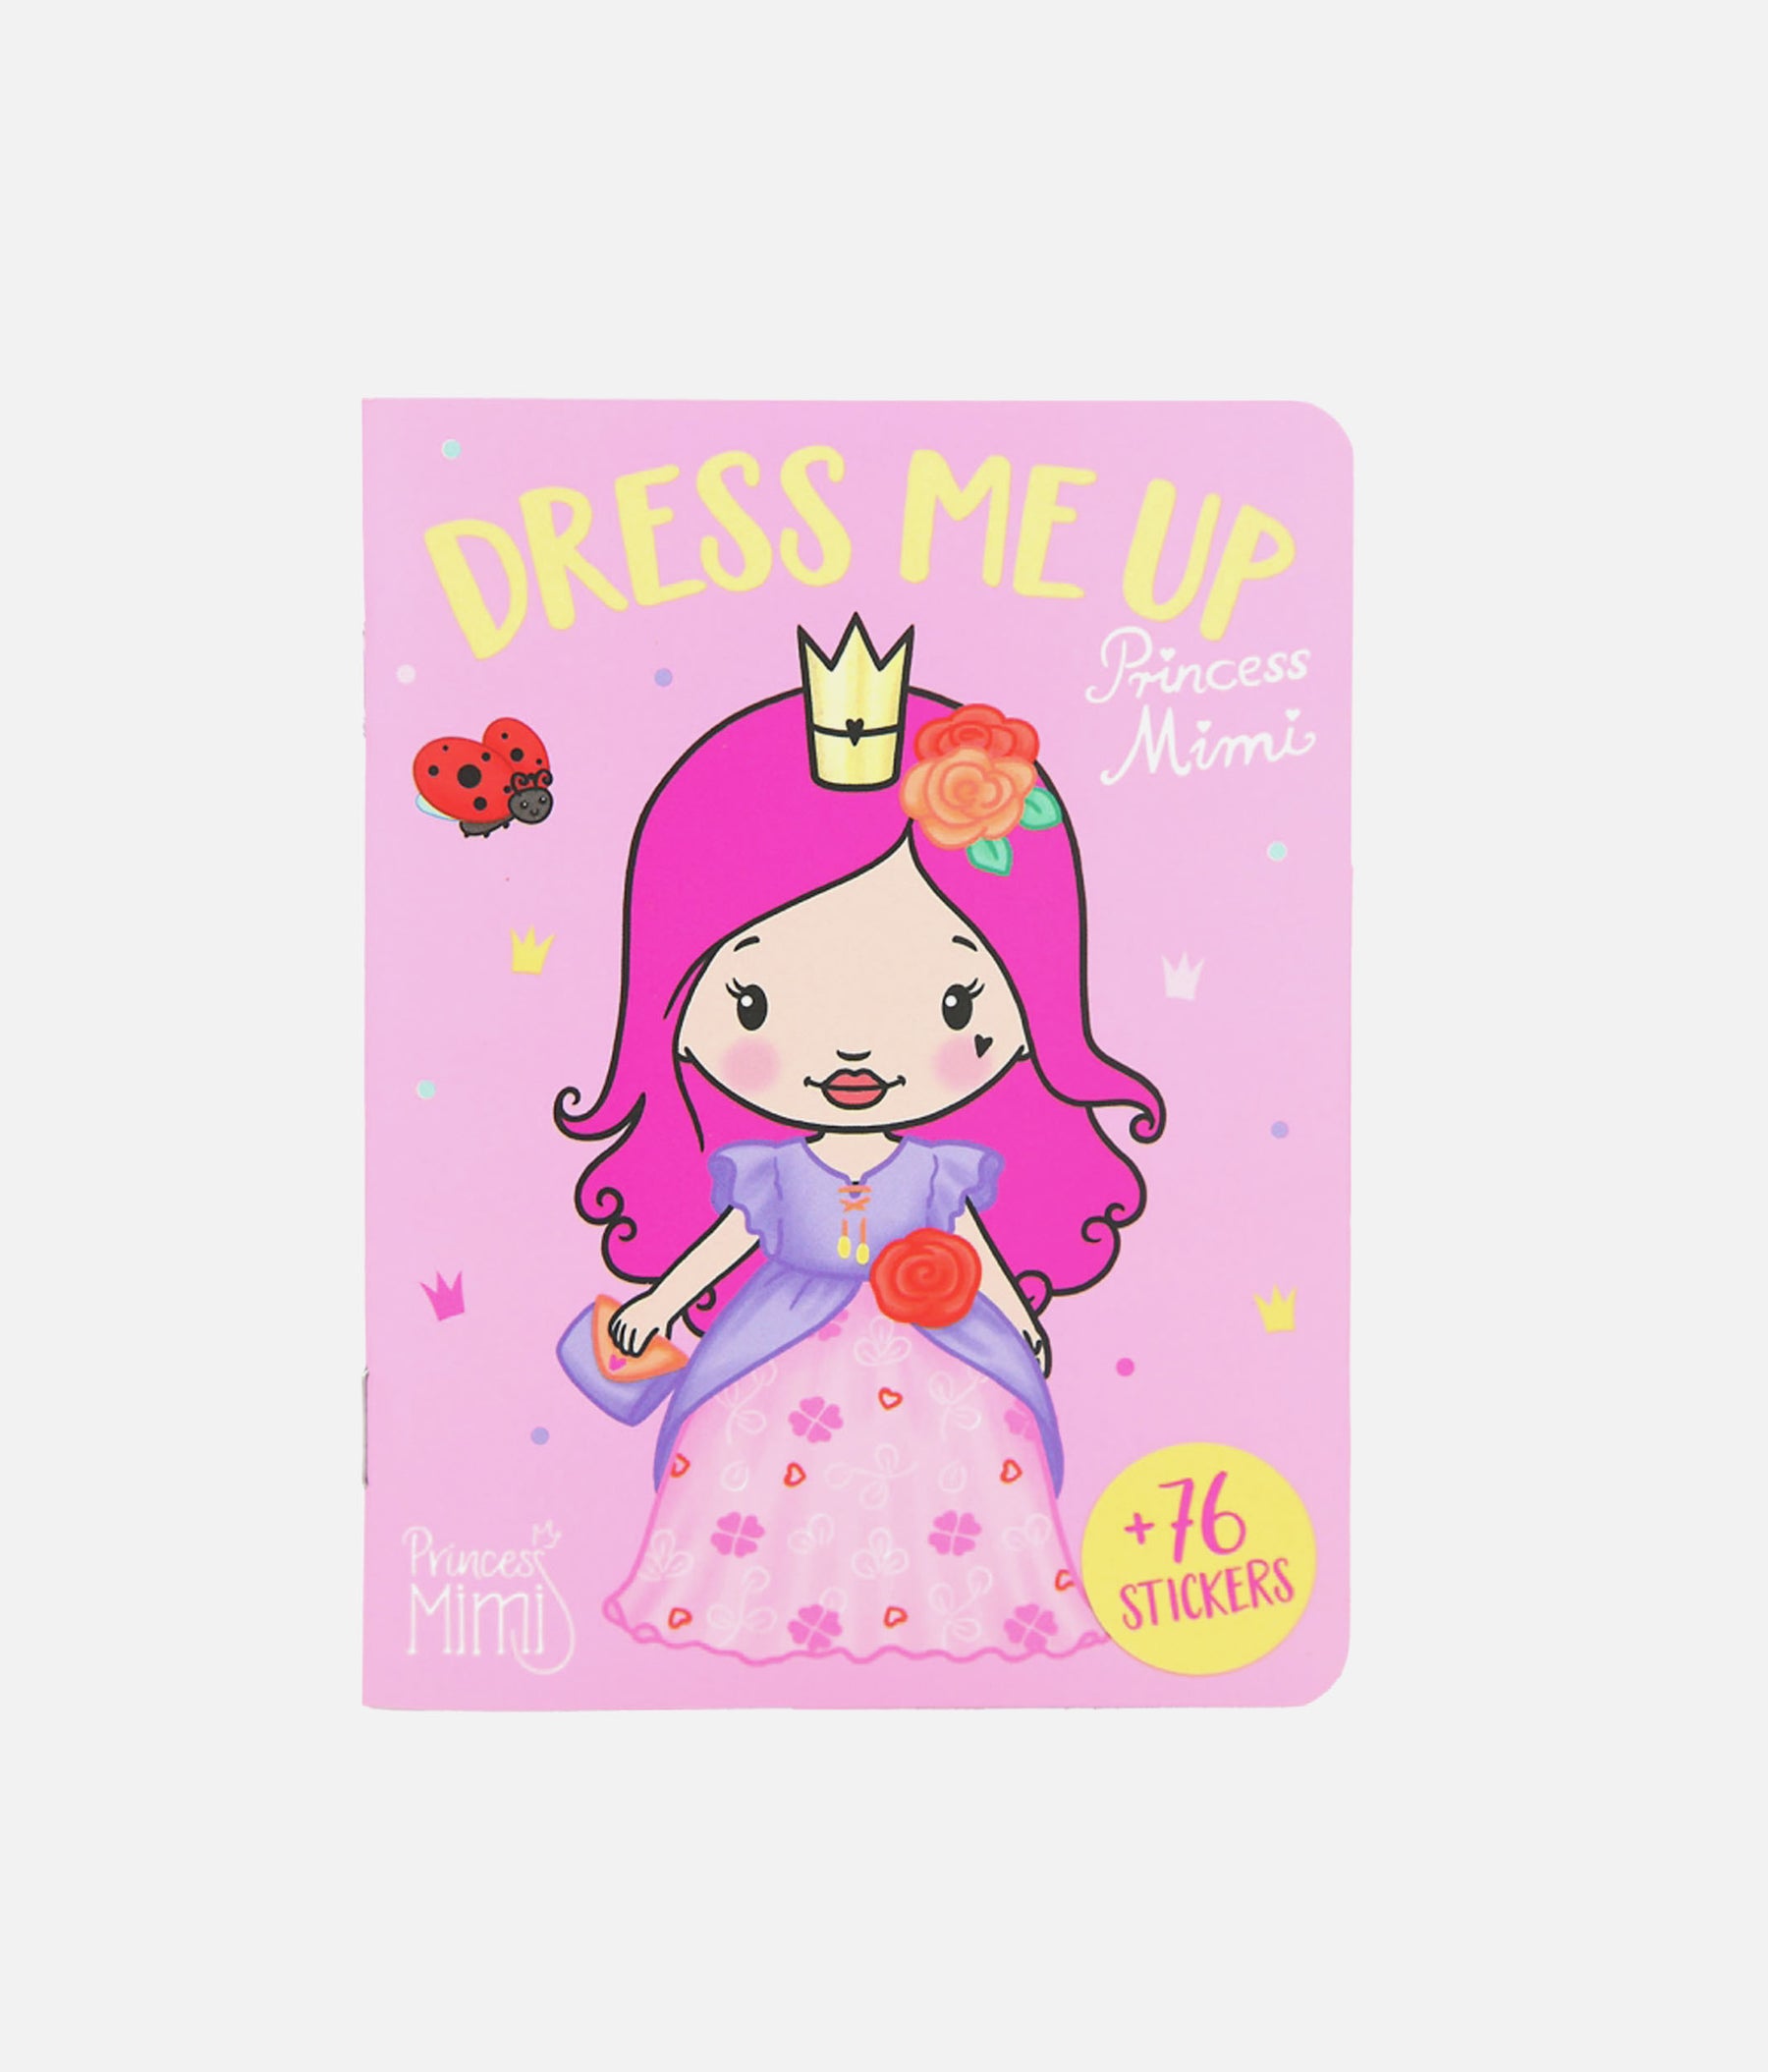 Princess Mimi Mini Dress Me Up DES 0012014